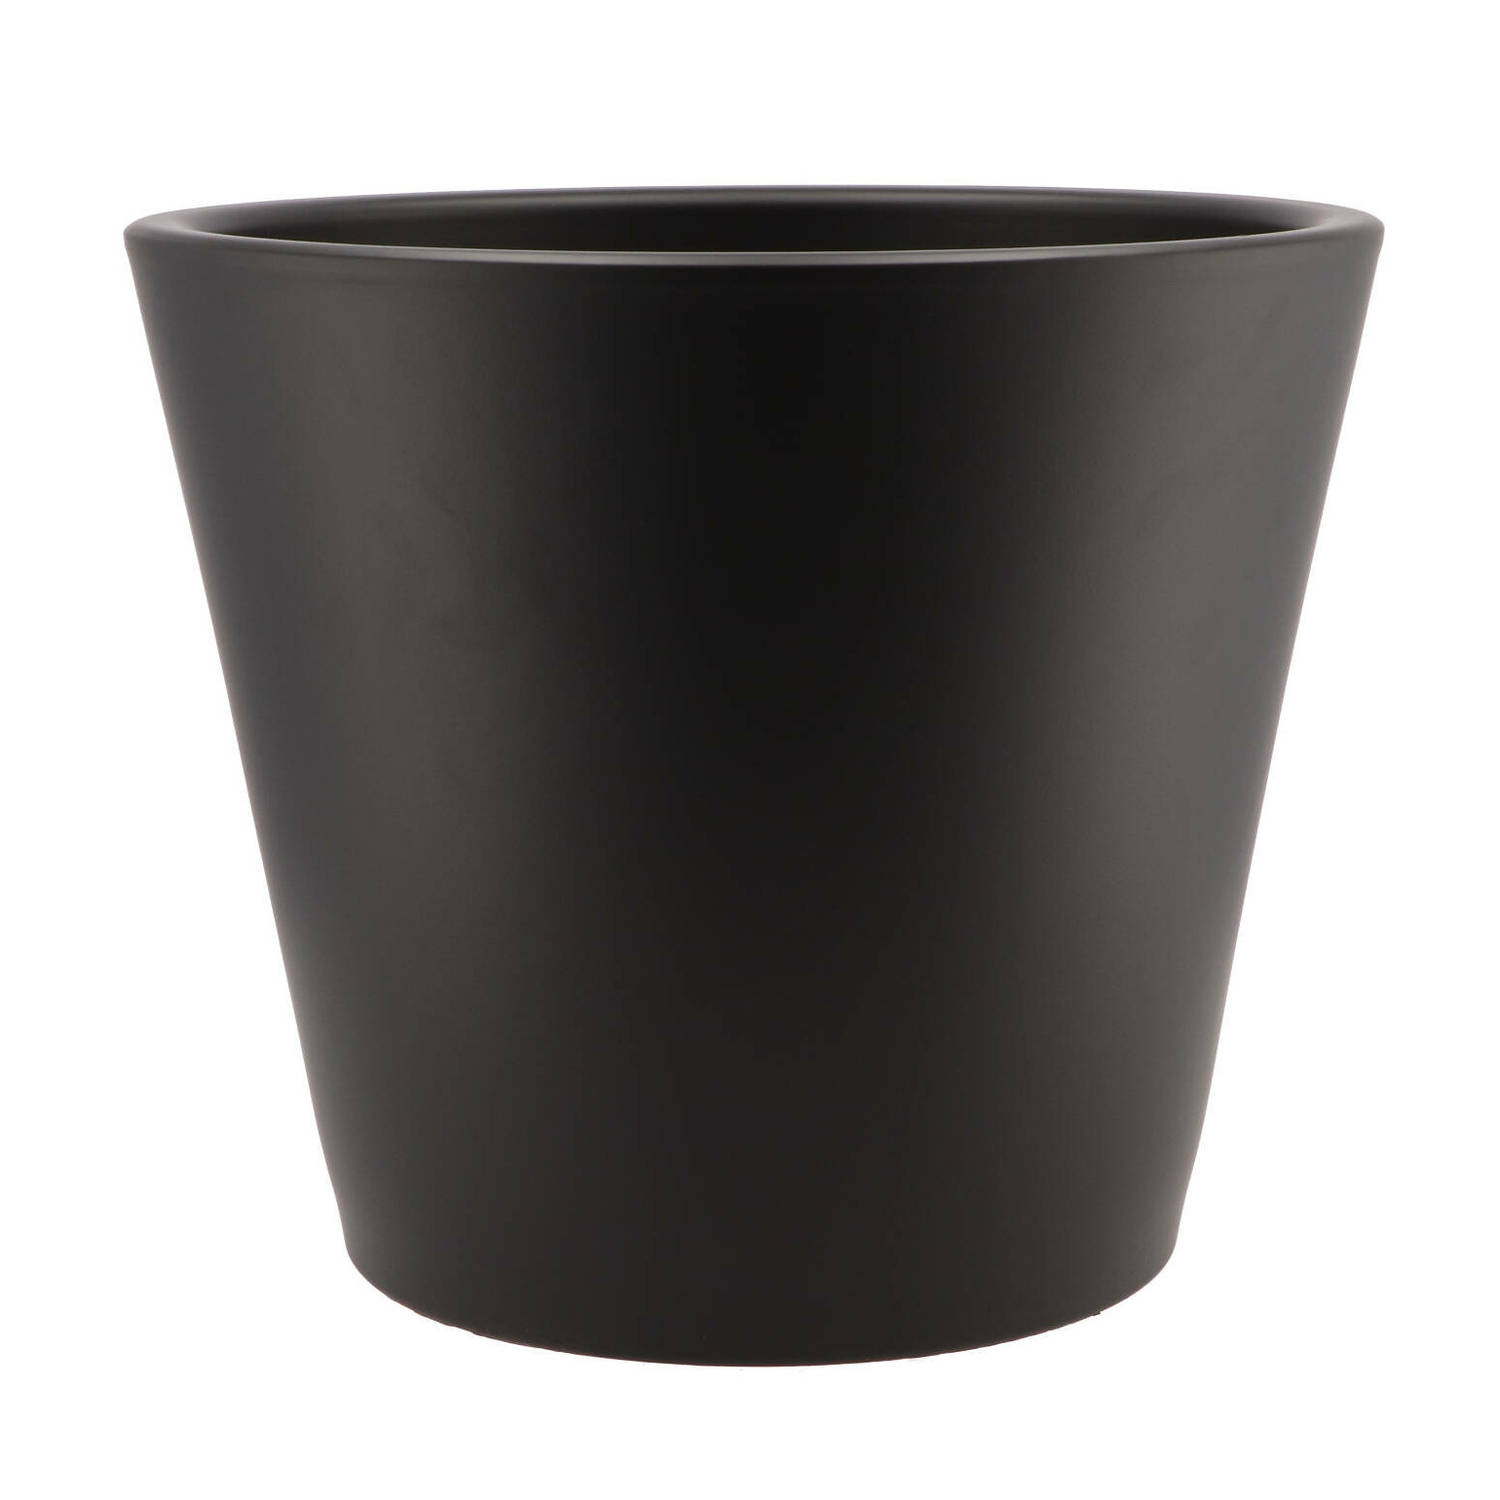 DK Design bloempot/plantenpot - Vinci - zwart mat - voor kamerplant - D28 x H34 cm - Plantenpotten